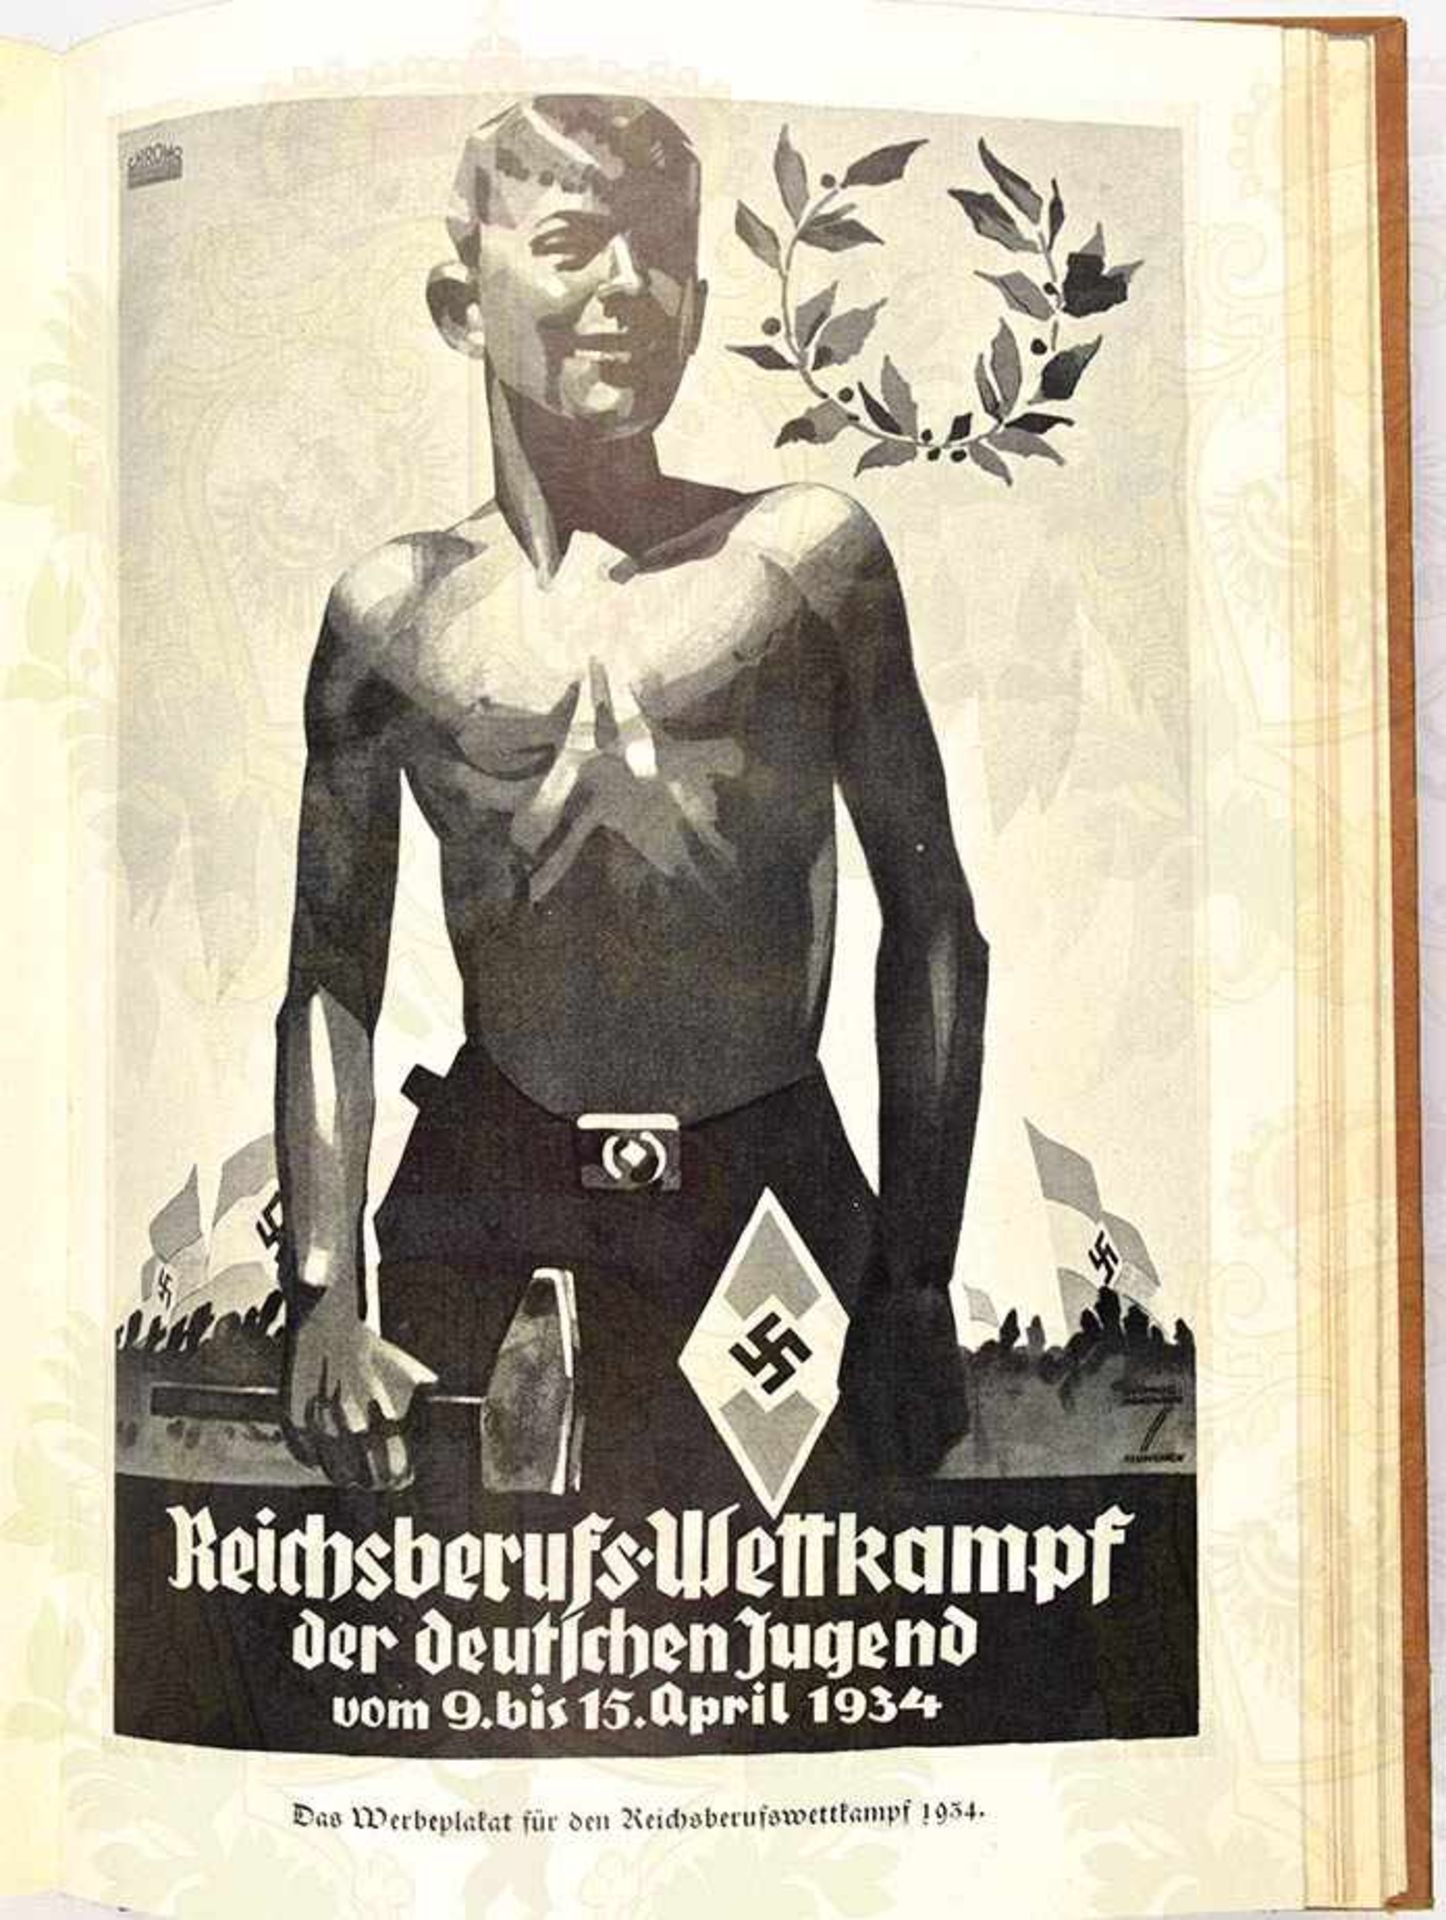 DER REICHSBERUFSWETTKAMPF, Obergebietsführer Artur Axmann, Bln. 1938, zahlr. Fotos, 382 - Bild 2 aus 2